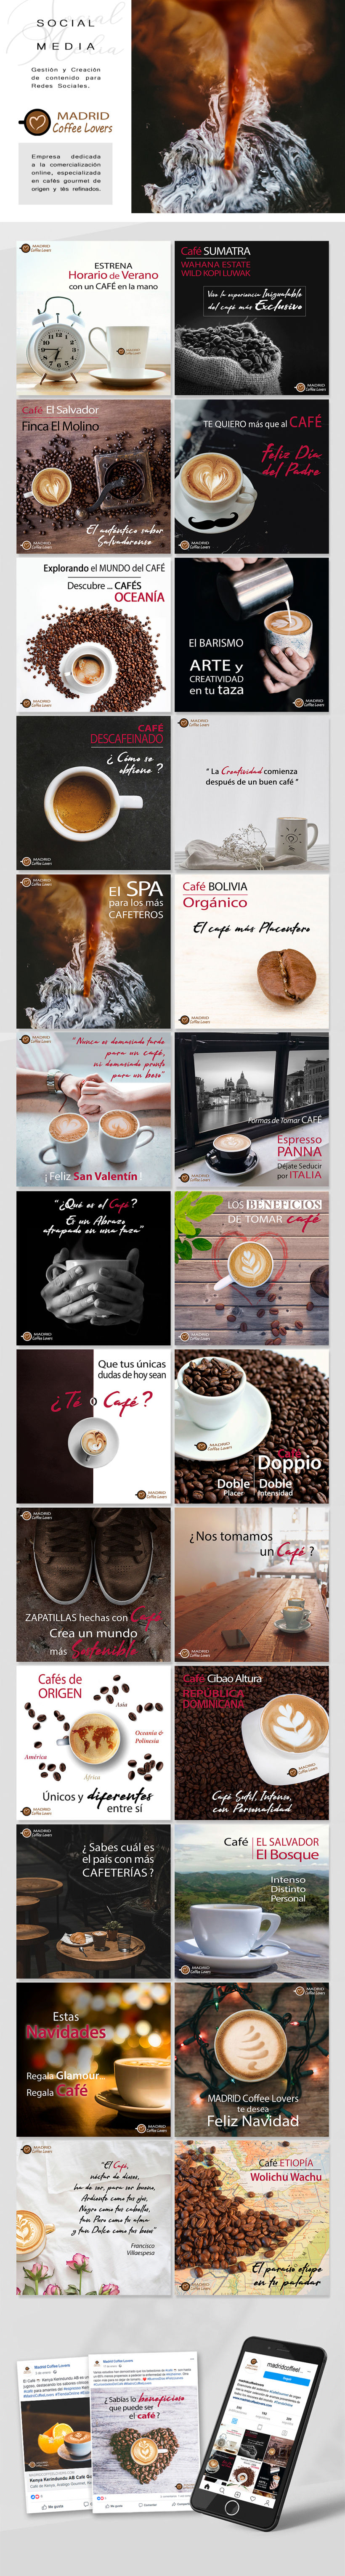 Social Media - Madrid Coffee Lovers 1